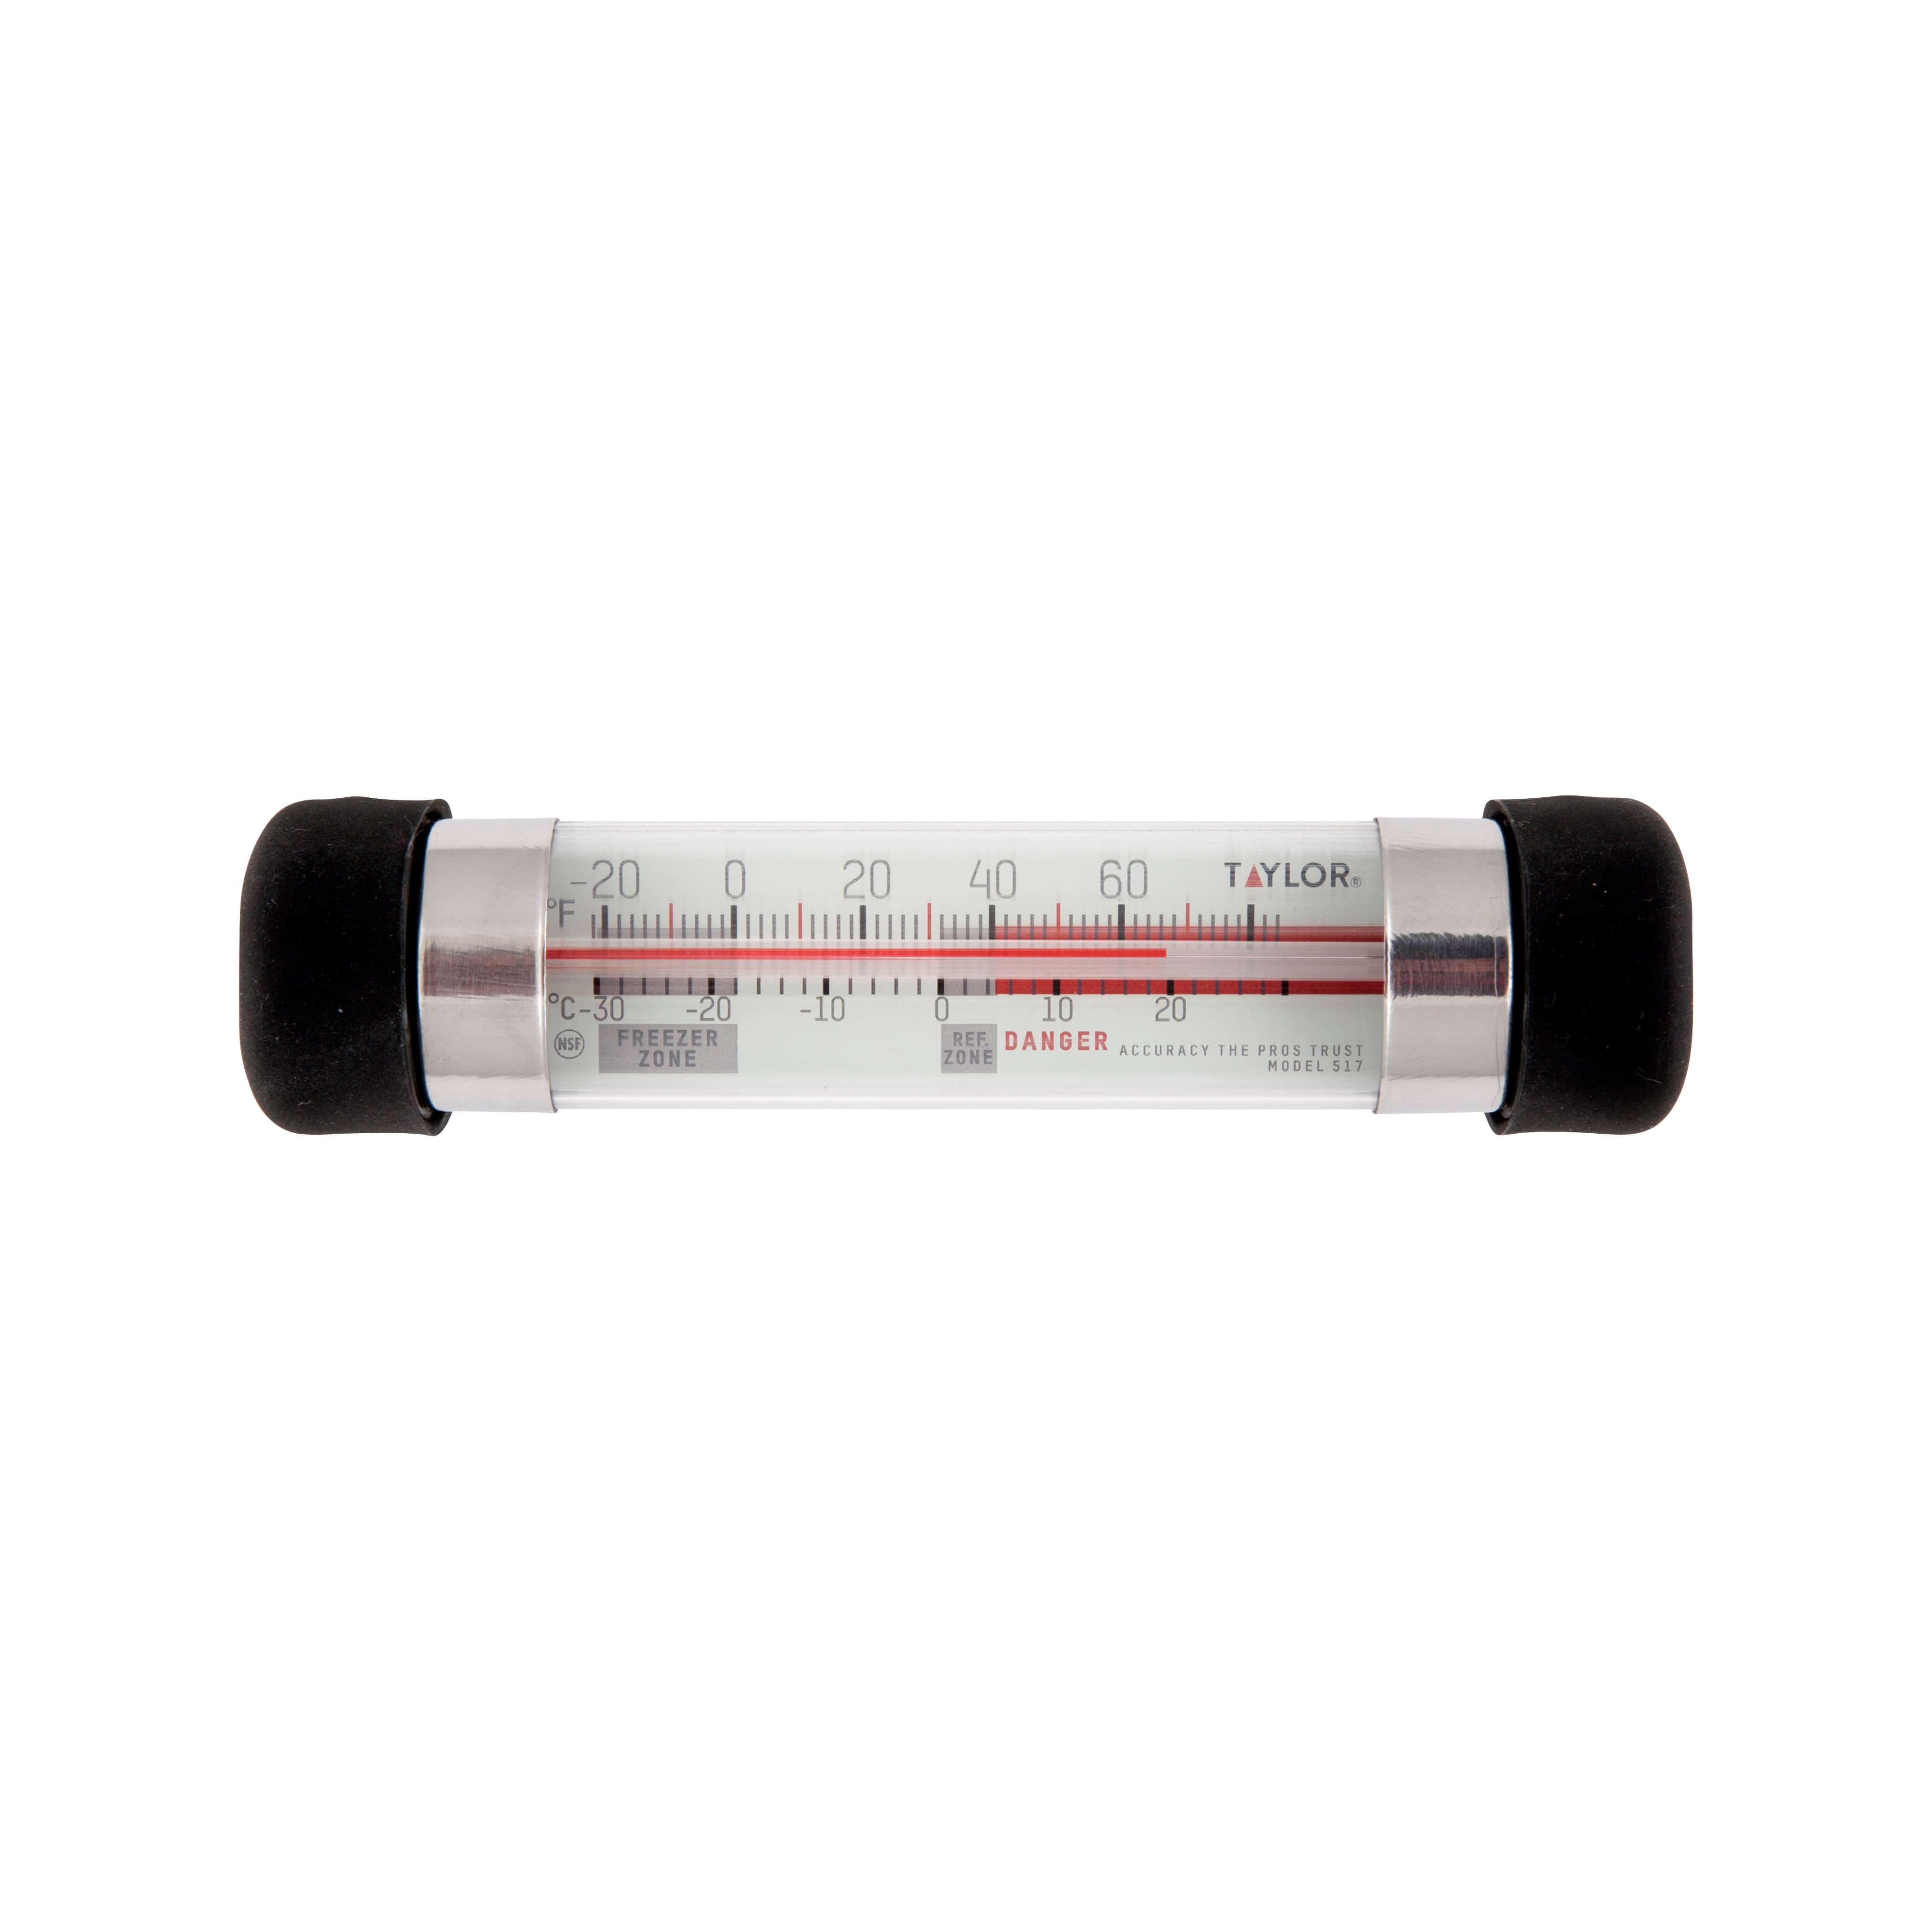 Taylor - Thermomètre pour frigo ou congélateur